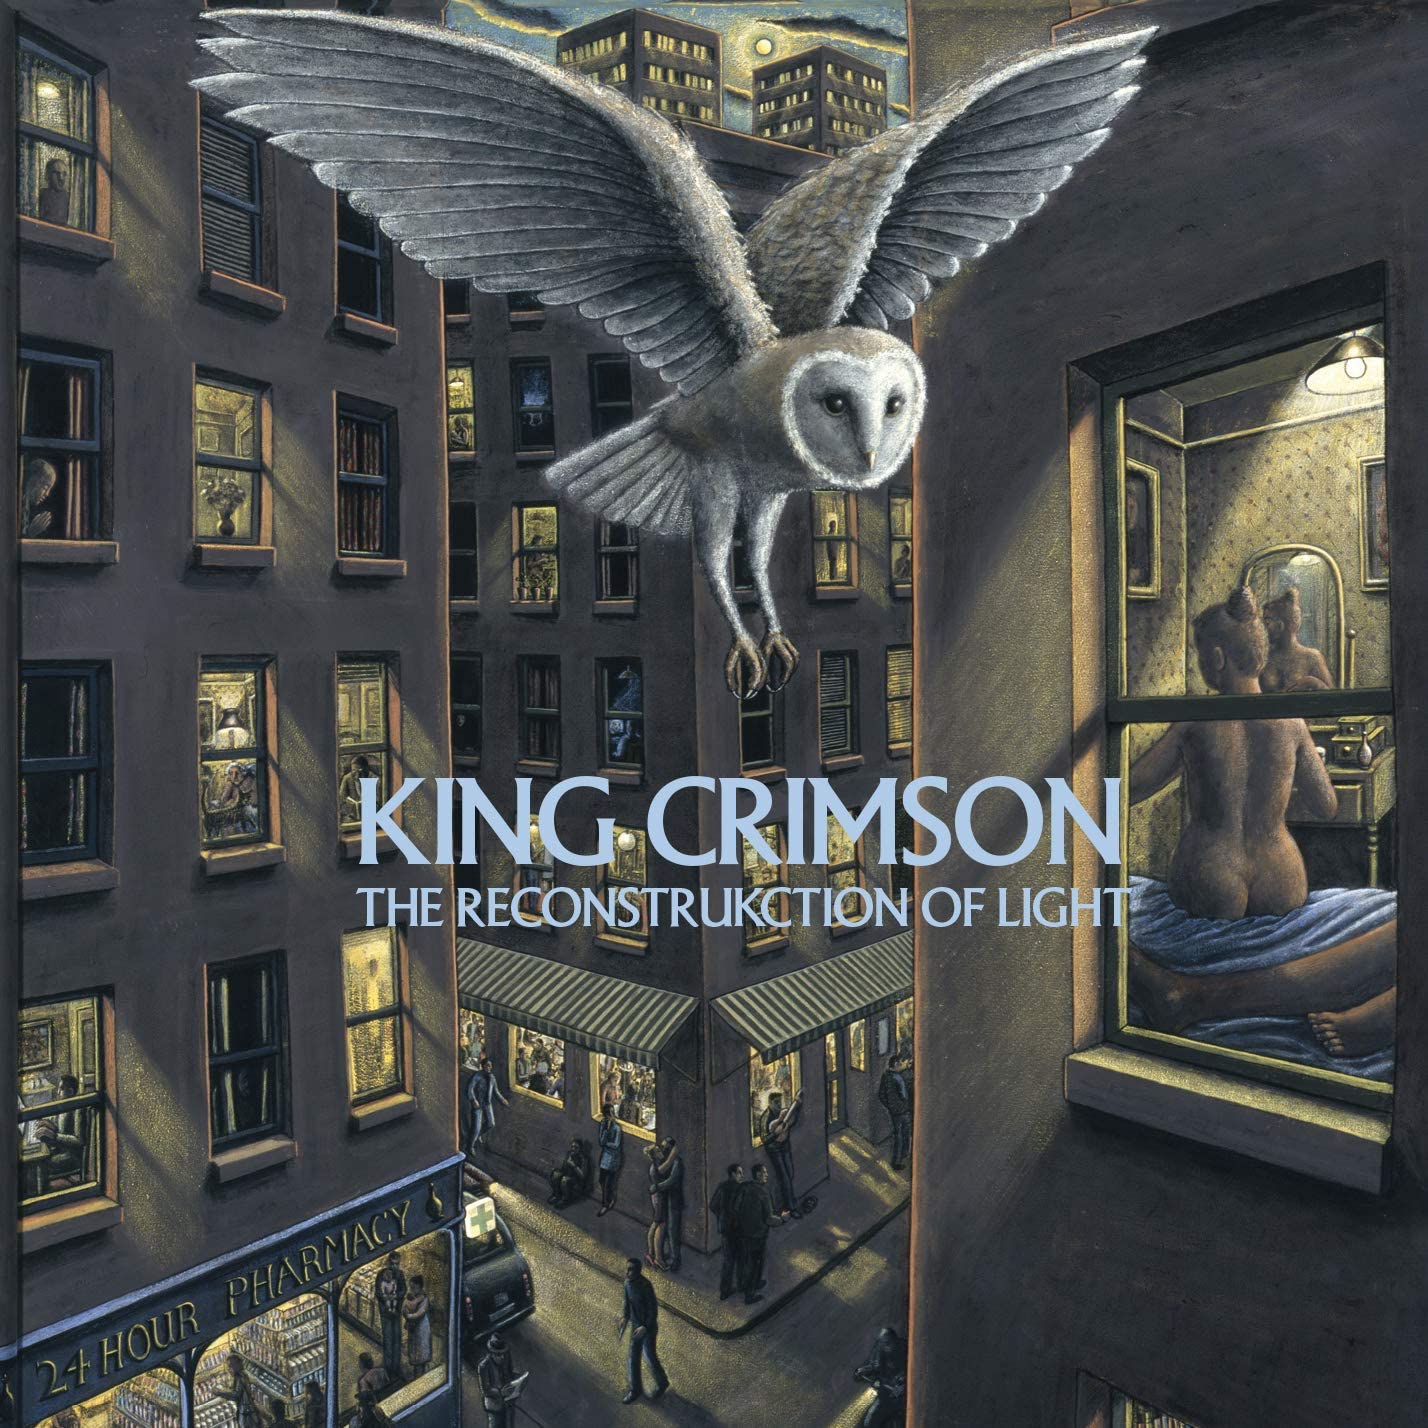 King Crimson -  Amazon Reconstrukction of Light